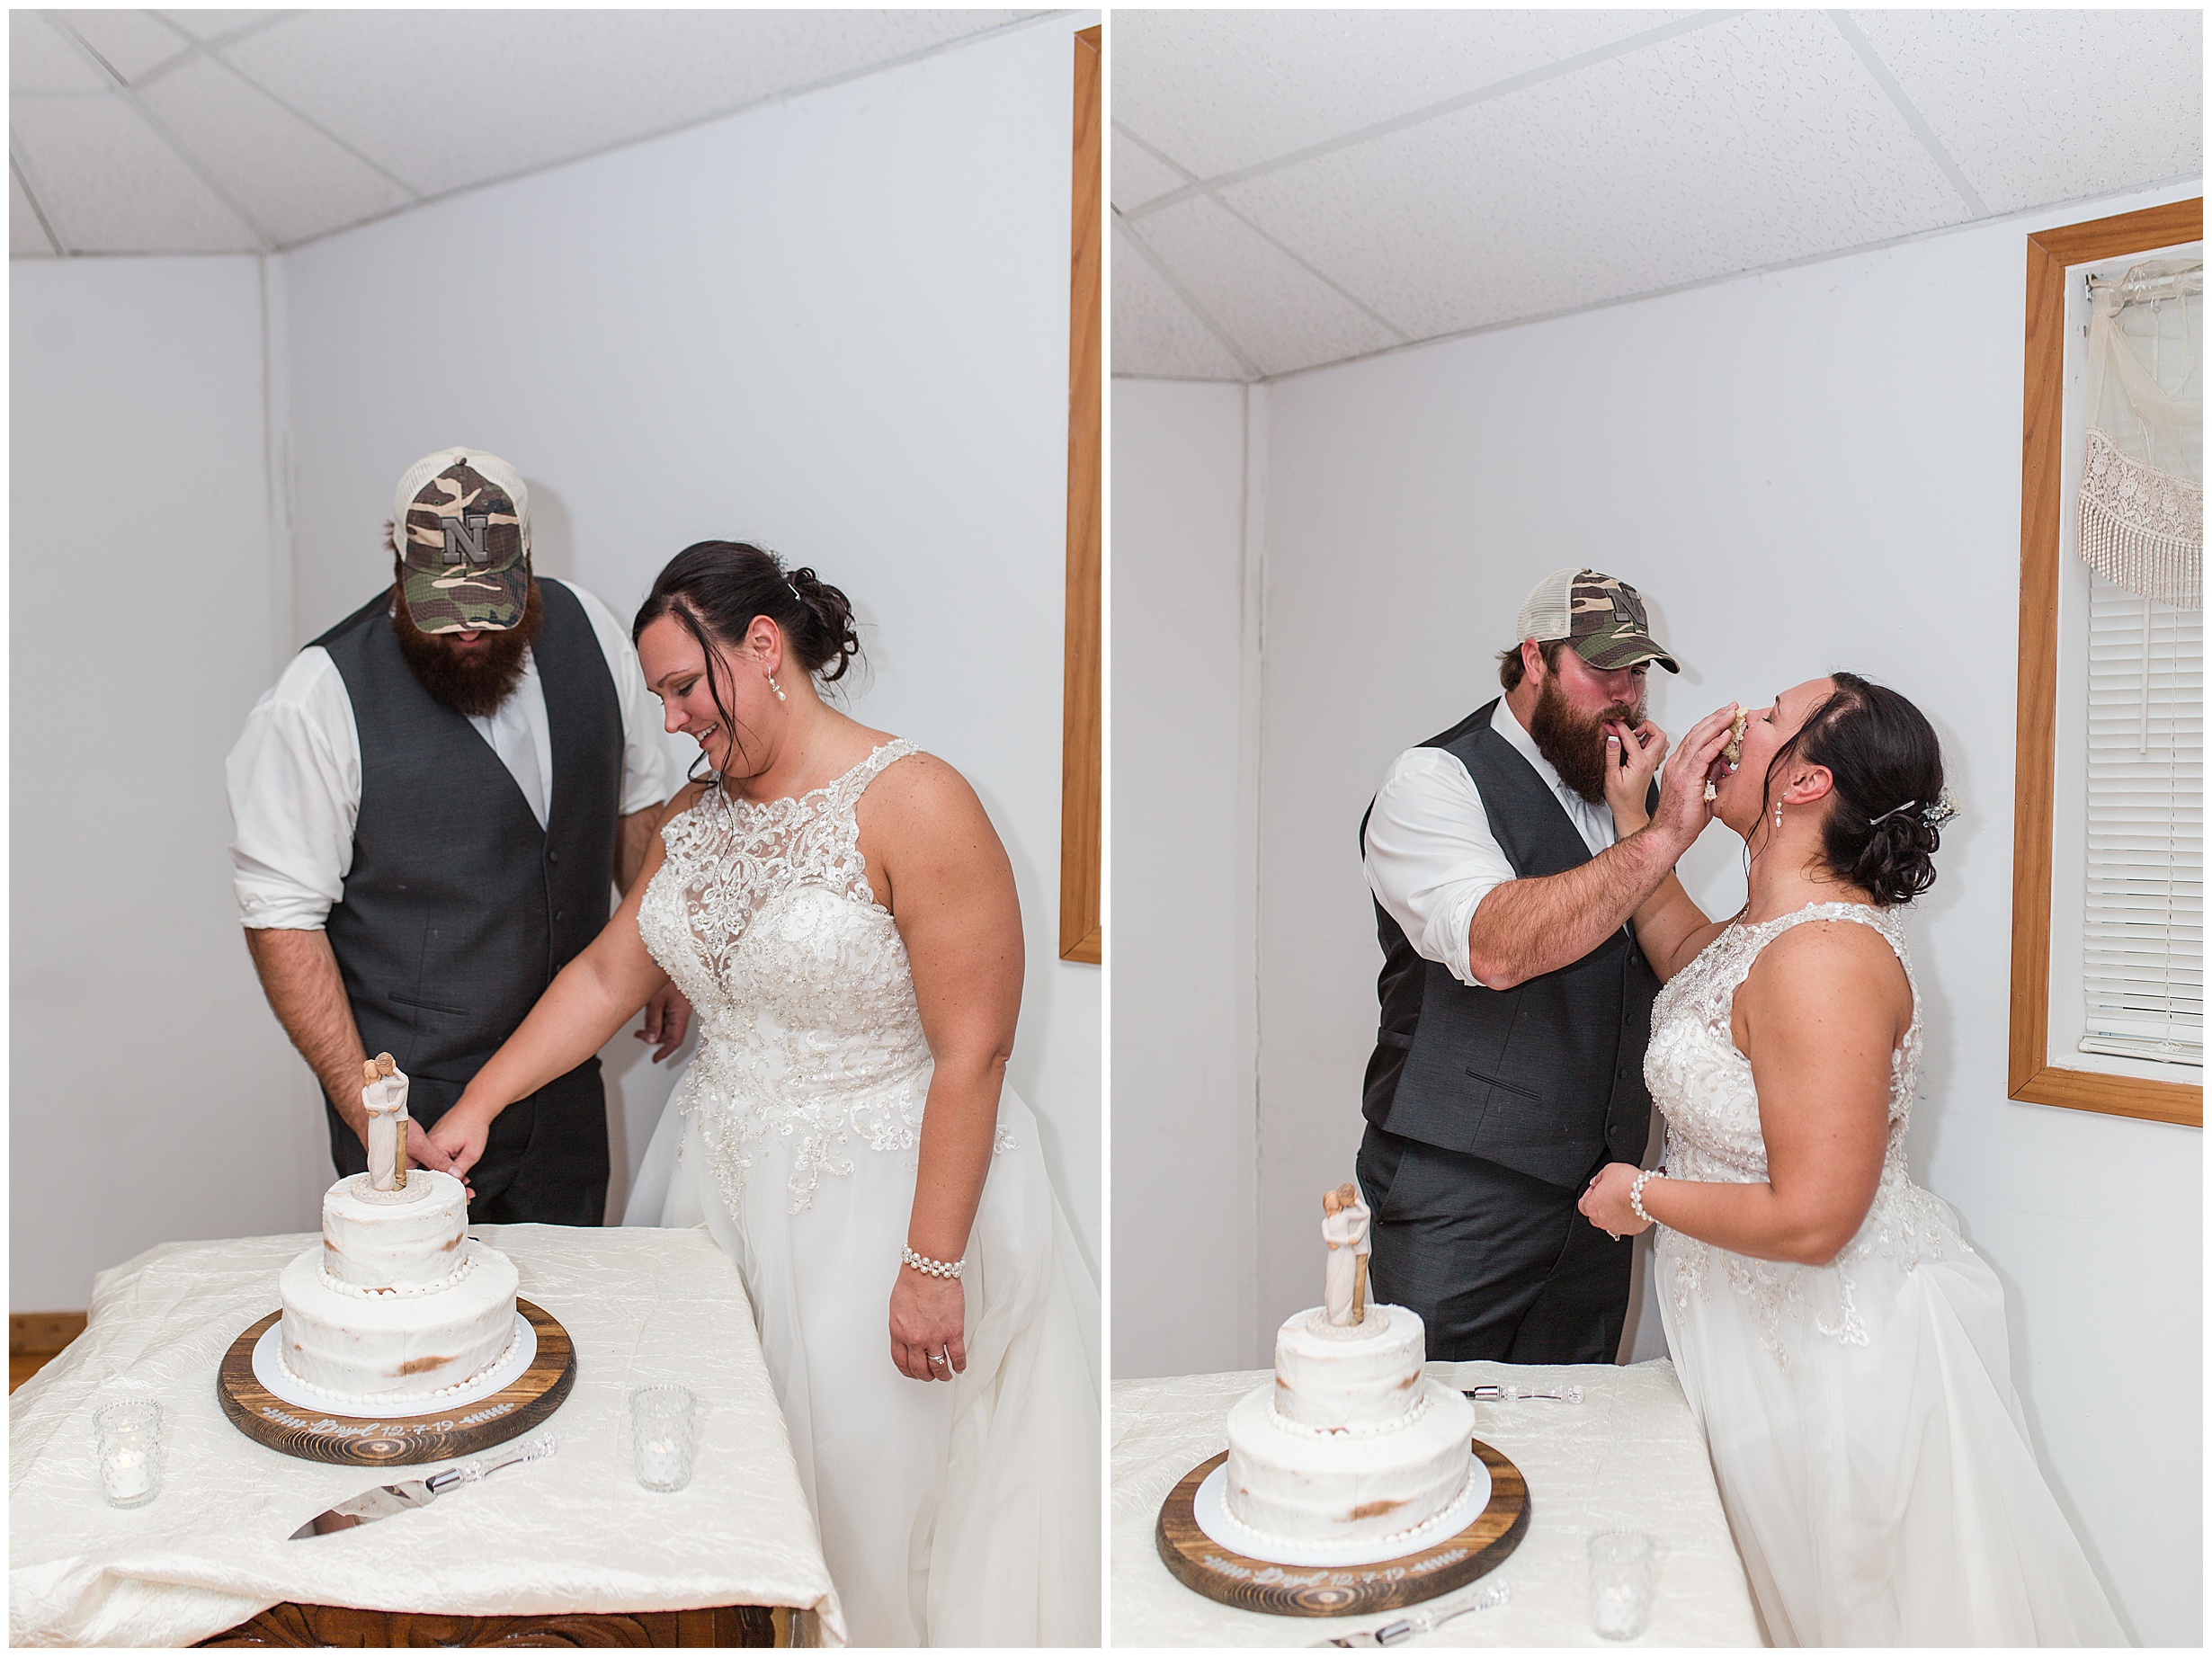 Iowa City Photographers - Decorah Wedding -Megan Snitker Photography_0182.jpg